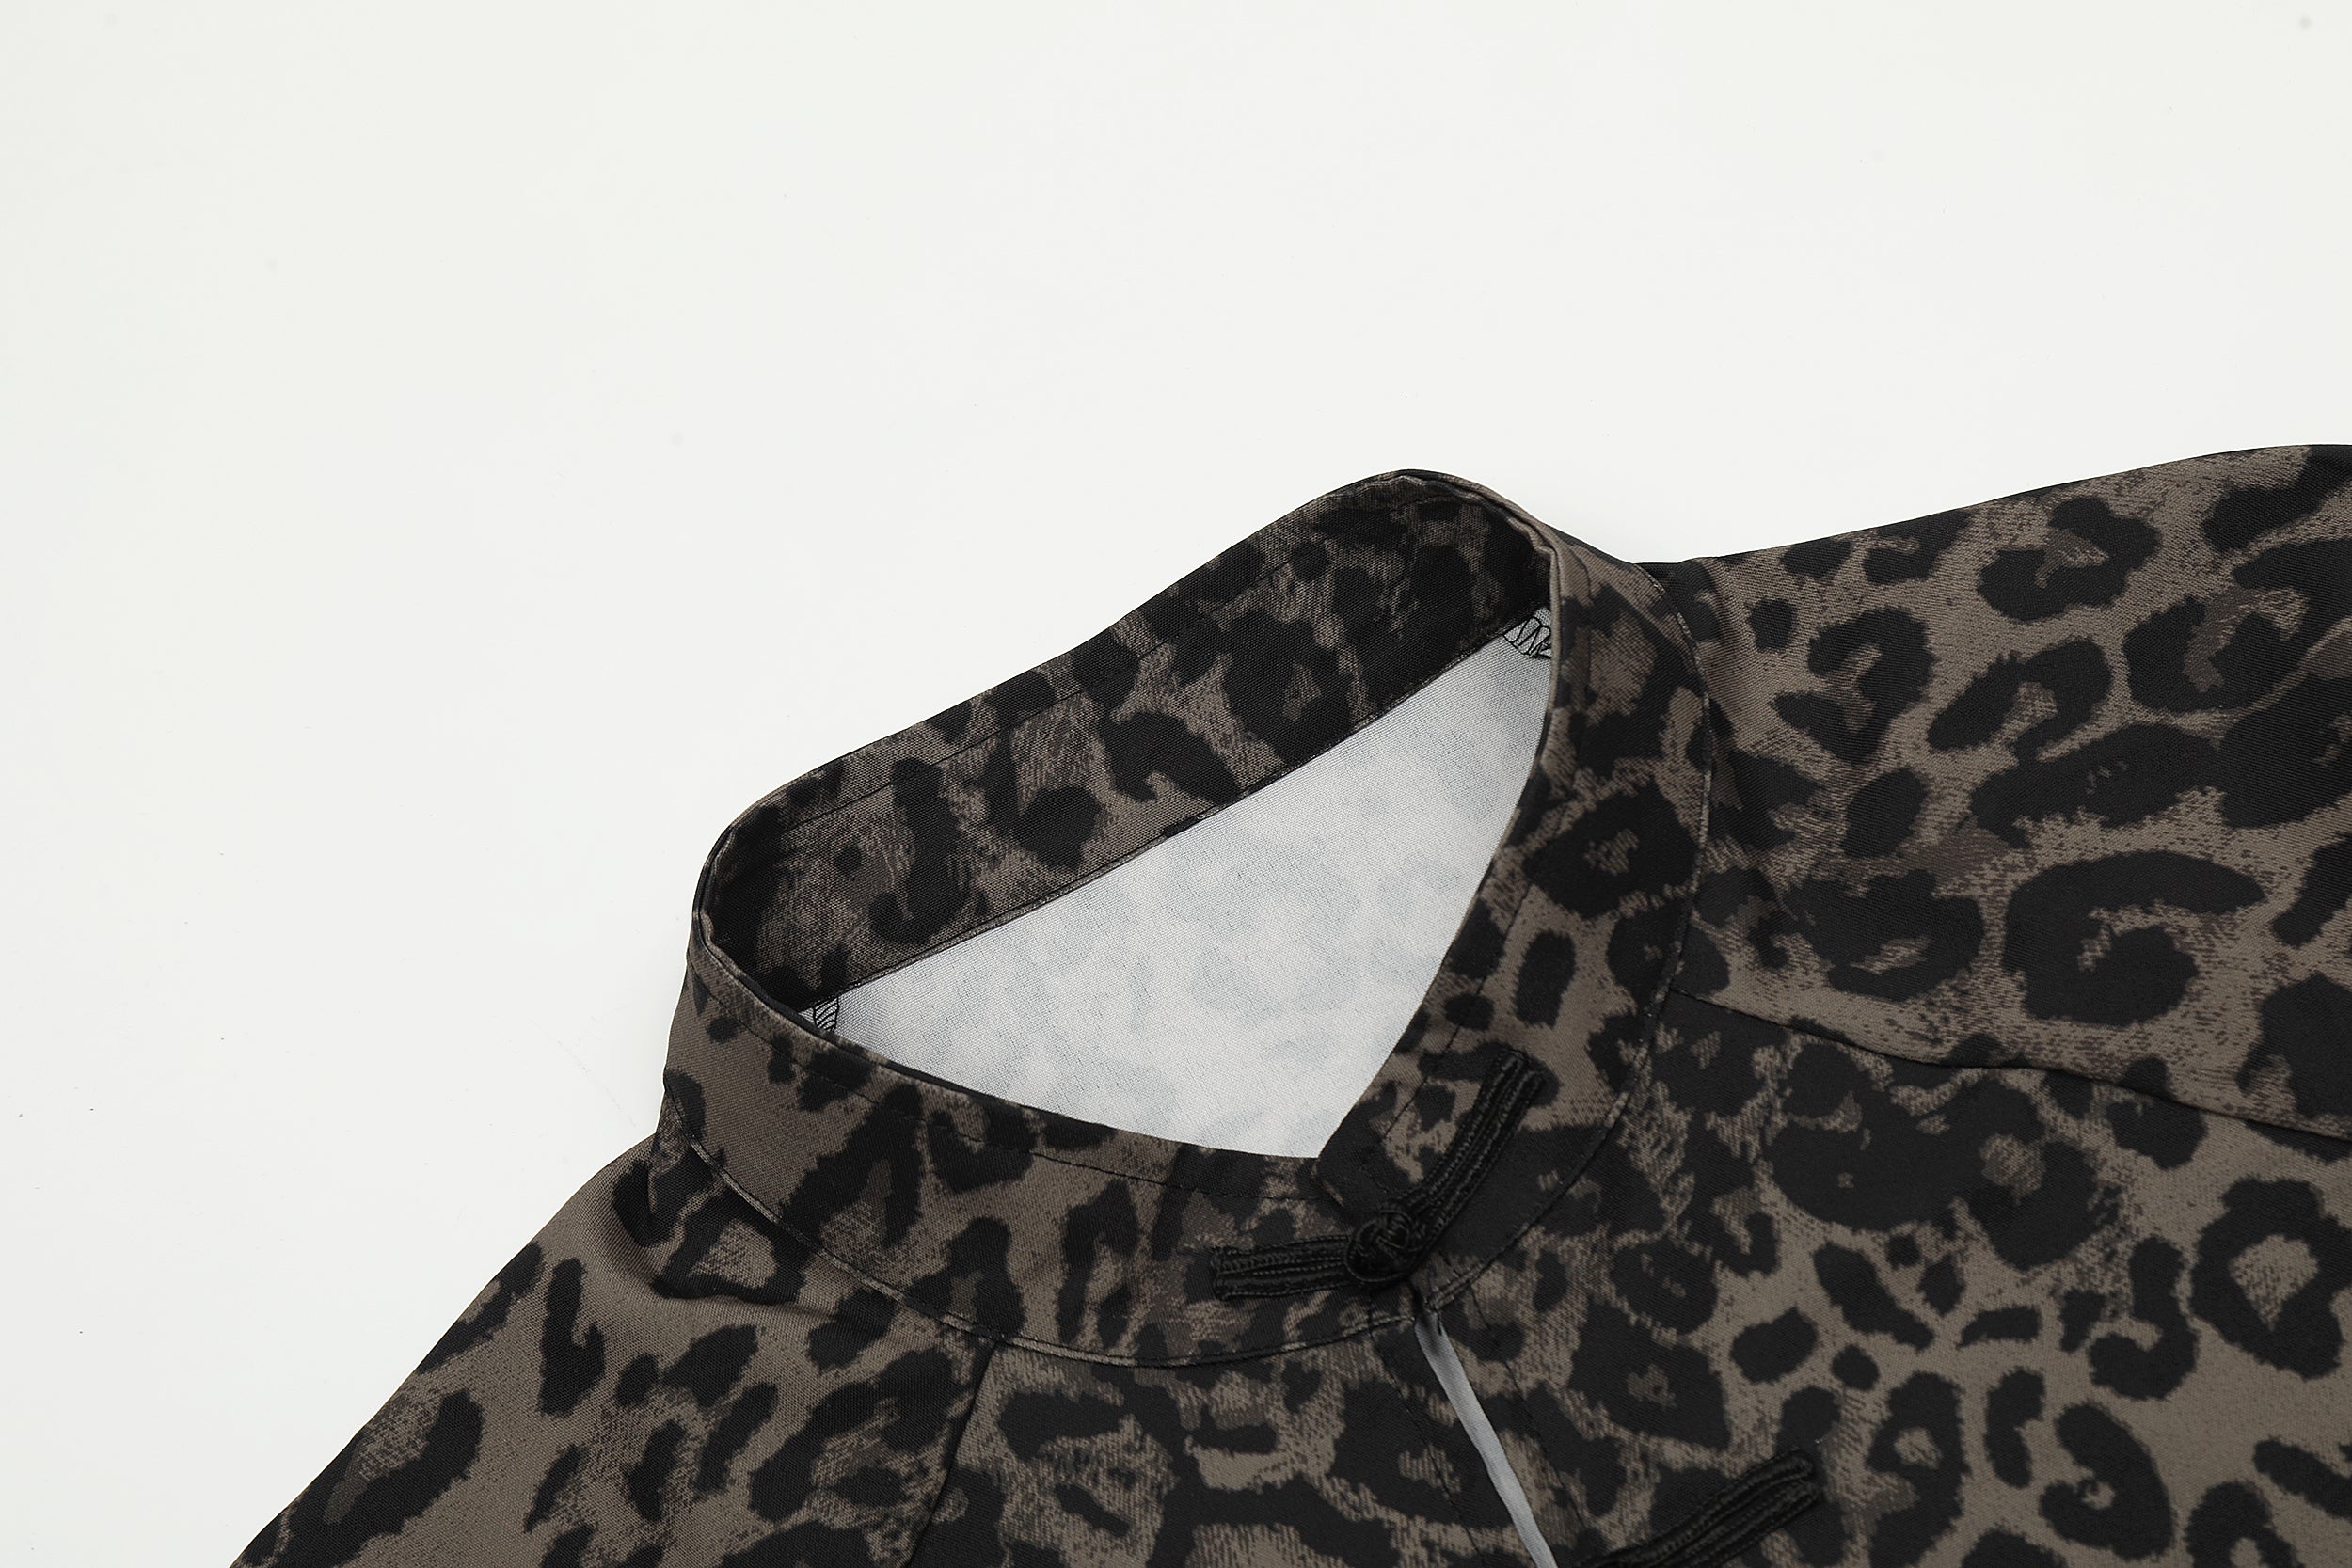 "Knot Button Leopard Print" Polo T Shirt - Santo 